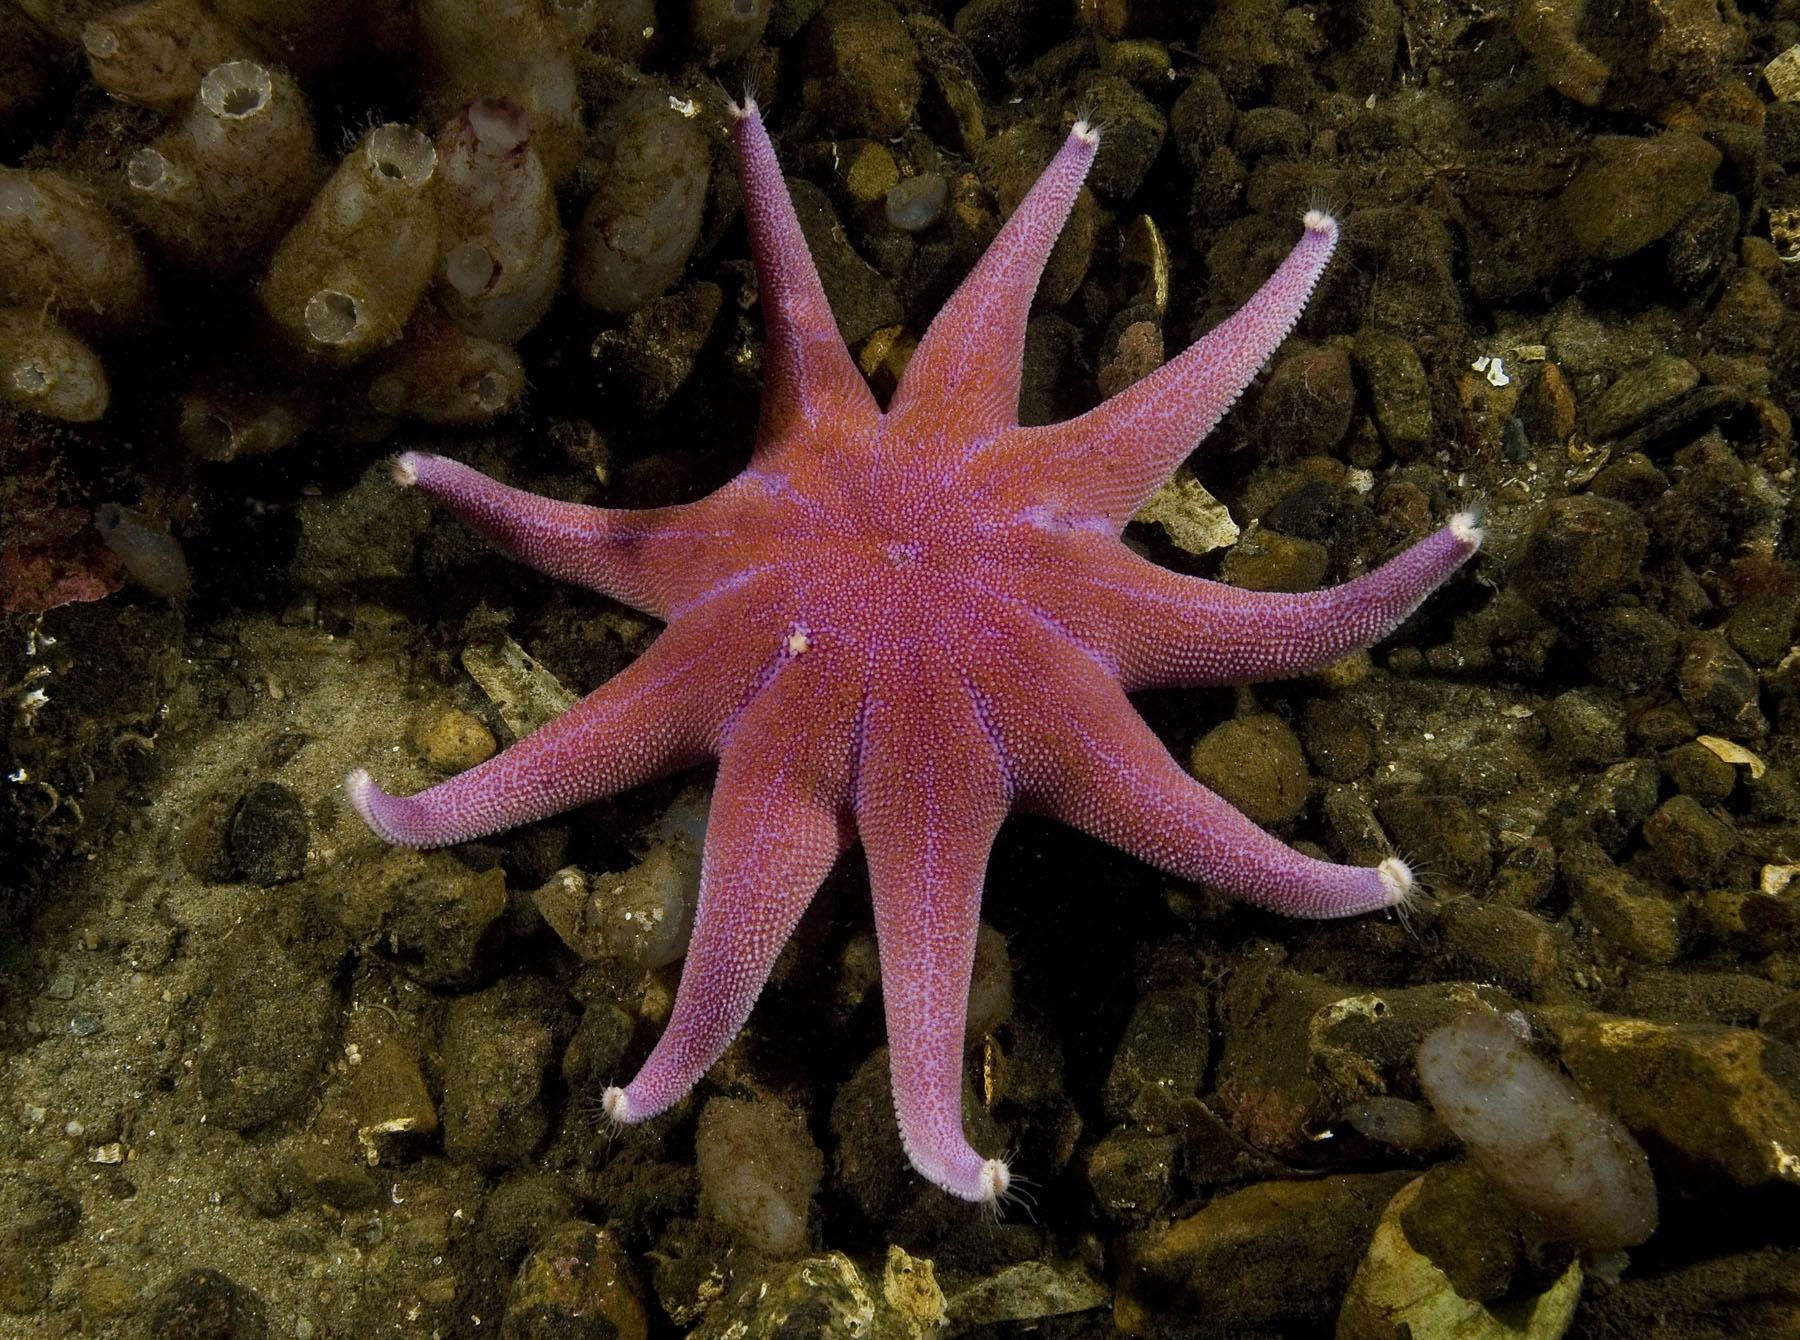 Starfish (c) Paul Naylor